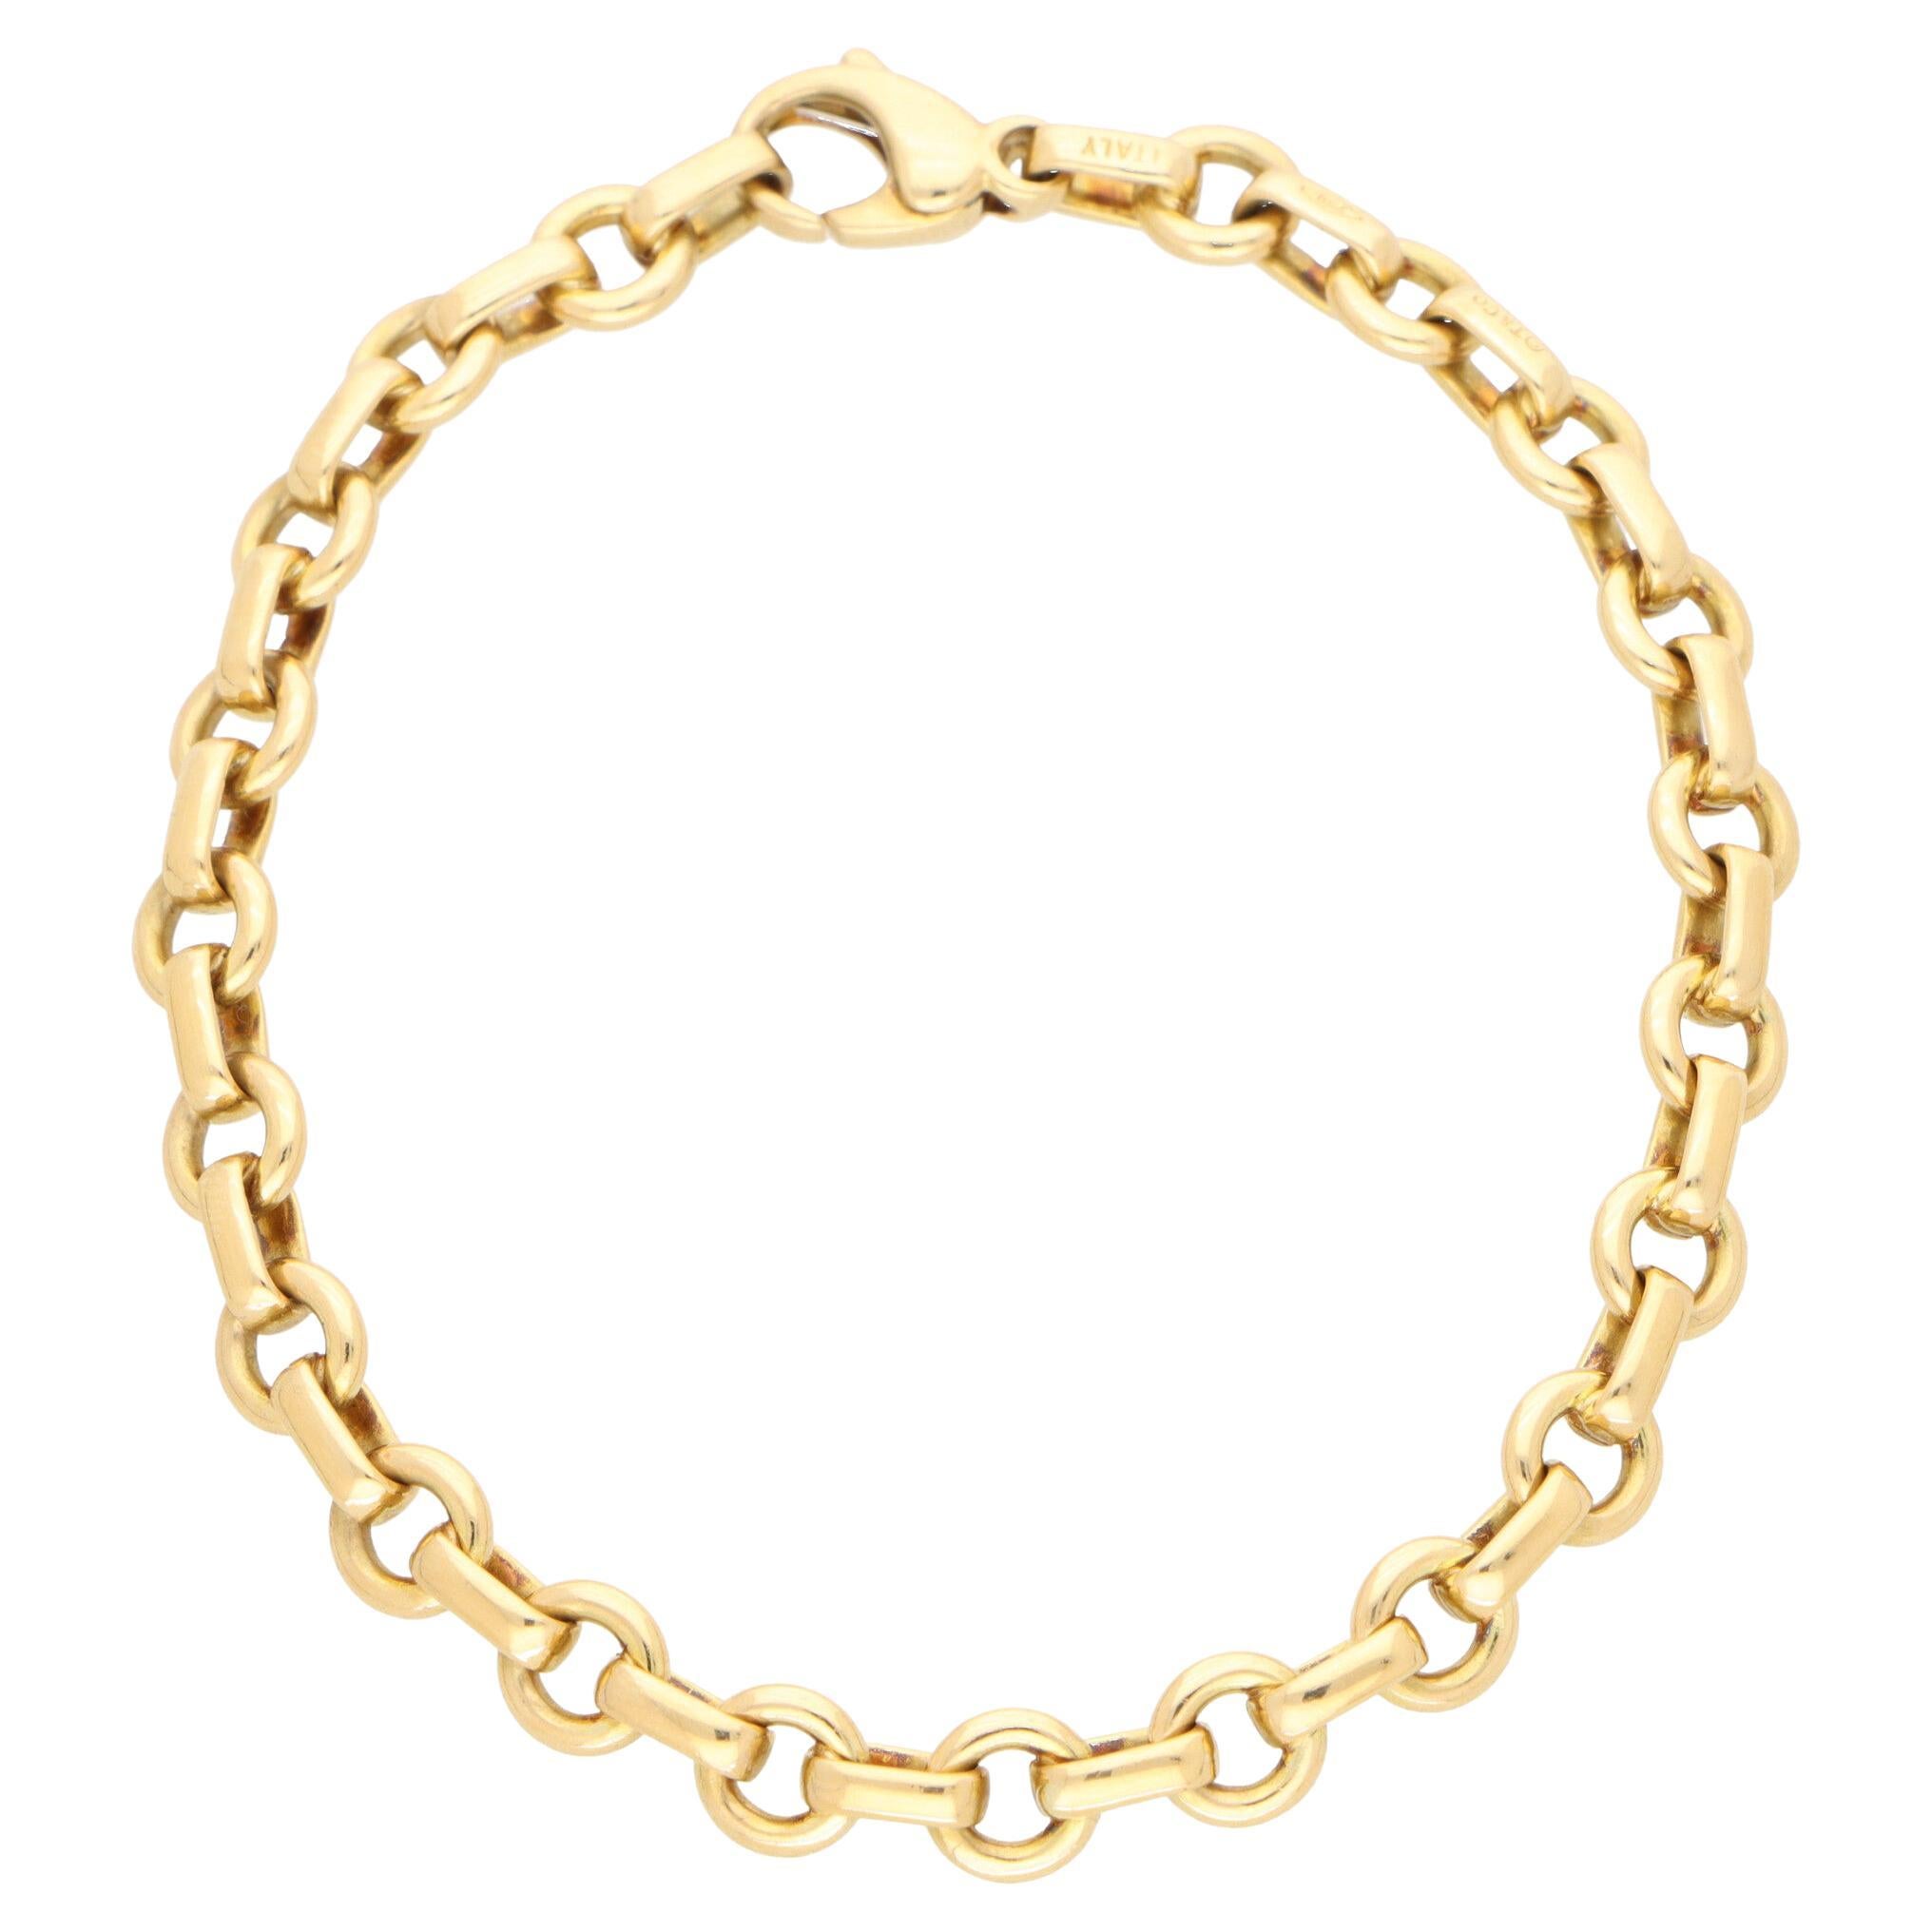 Vintage Tiffany & Co. Chain Link Bracelet Set in 18k Yellow Gold